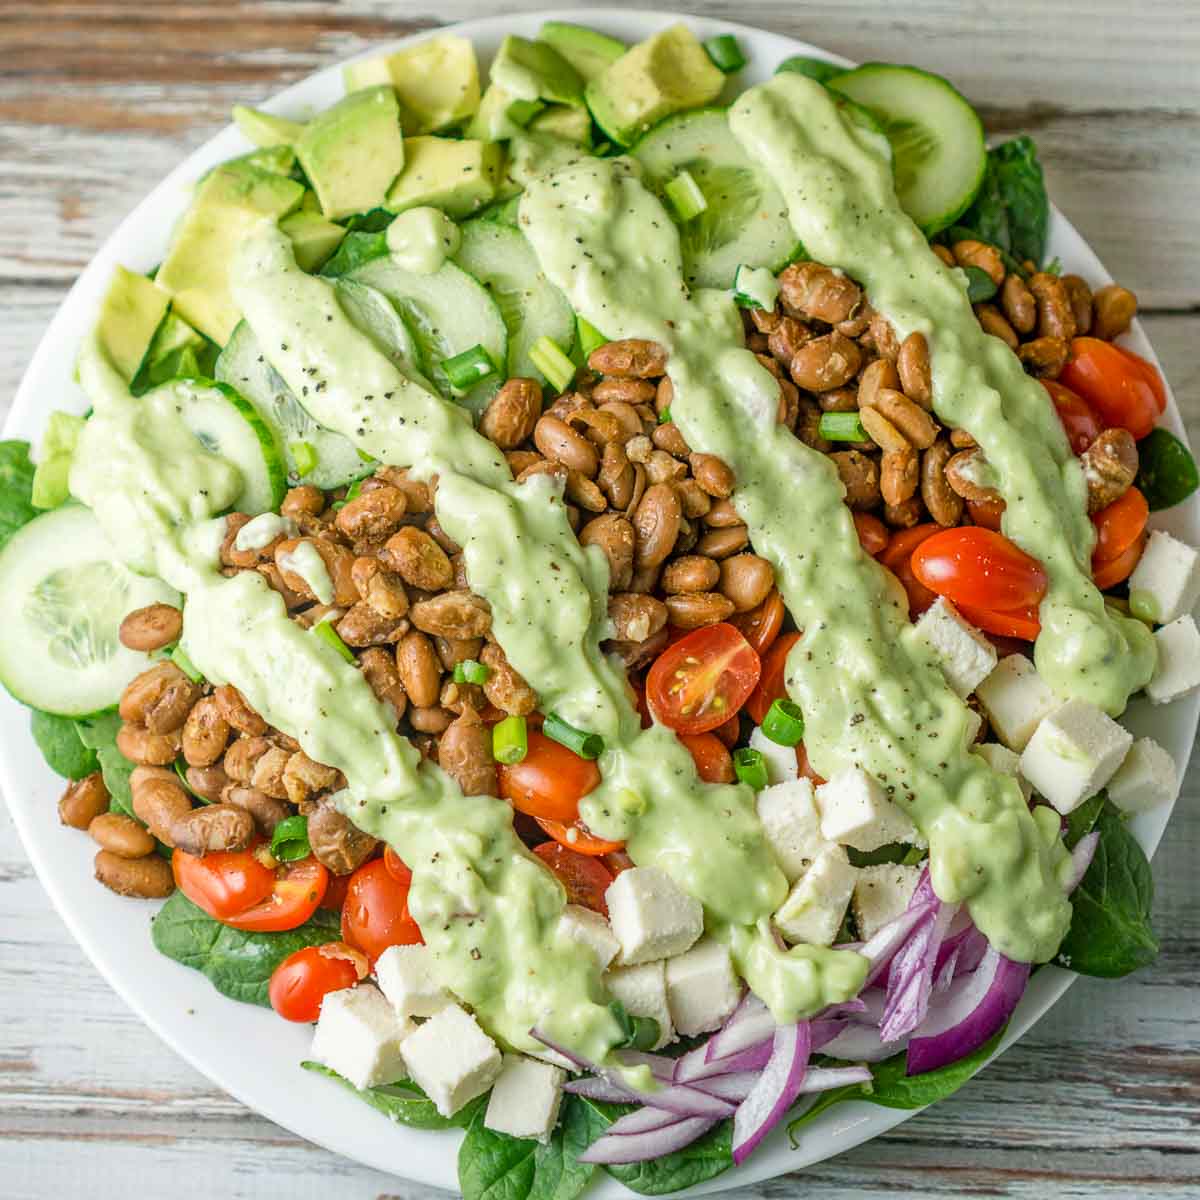 Plate of pinto bean salad with homemade avocado dressing